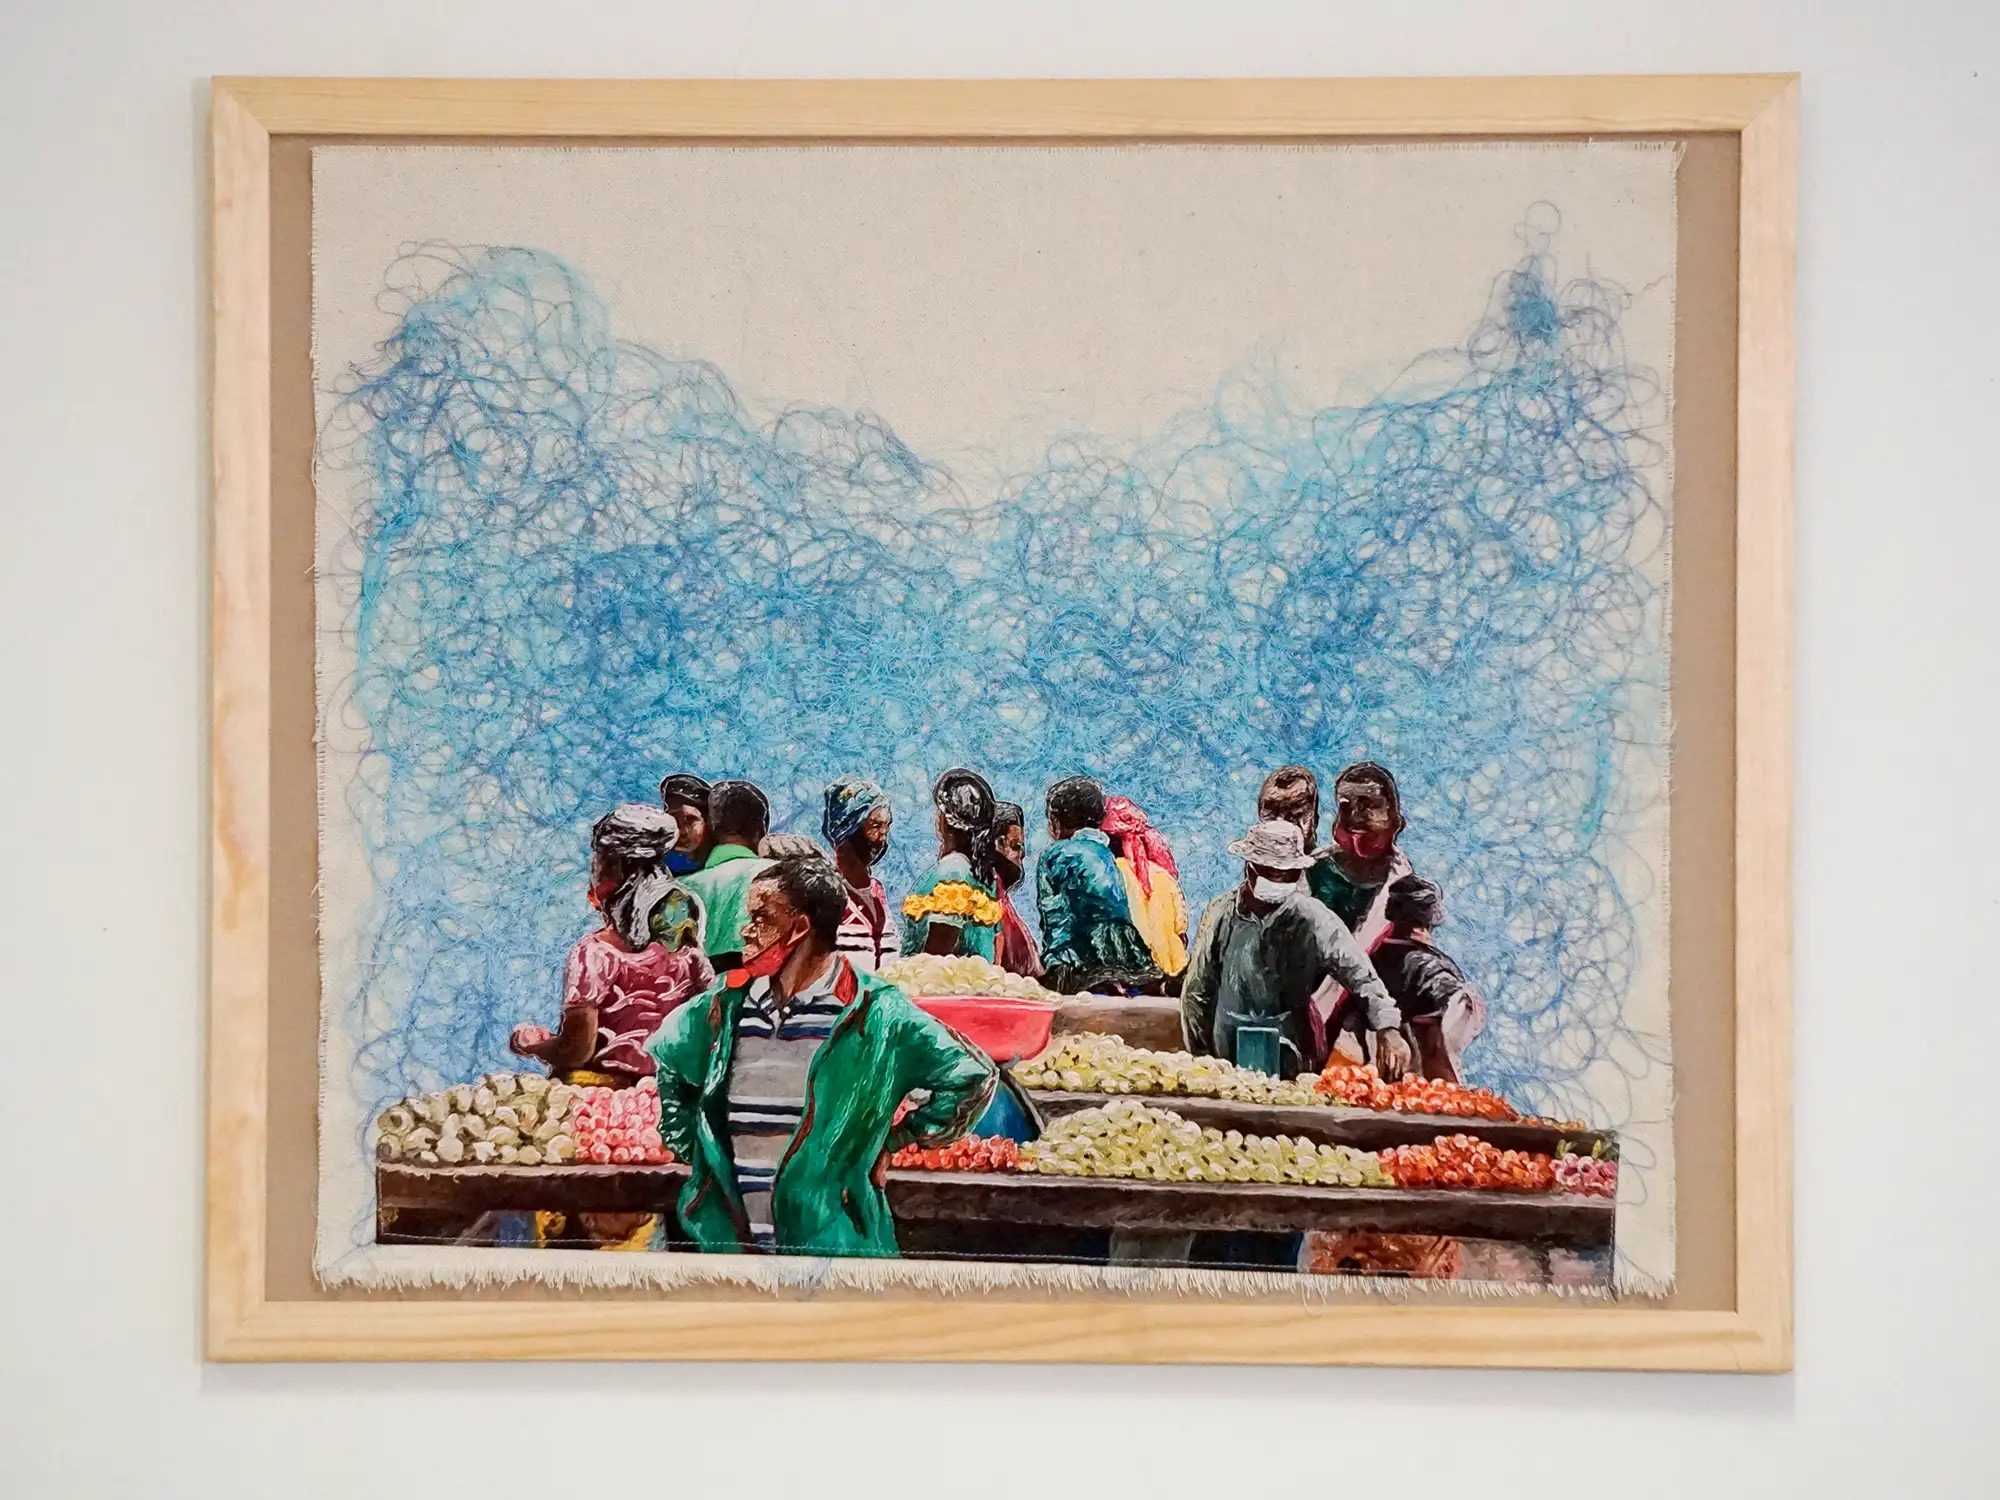 ndagijimana alphonse, mixed media work, promising emerging artist , rwanda, contemporary art now